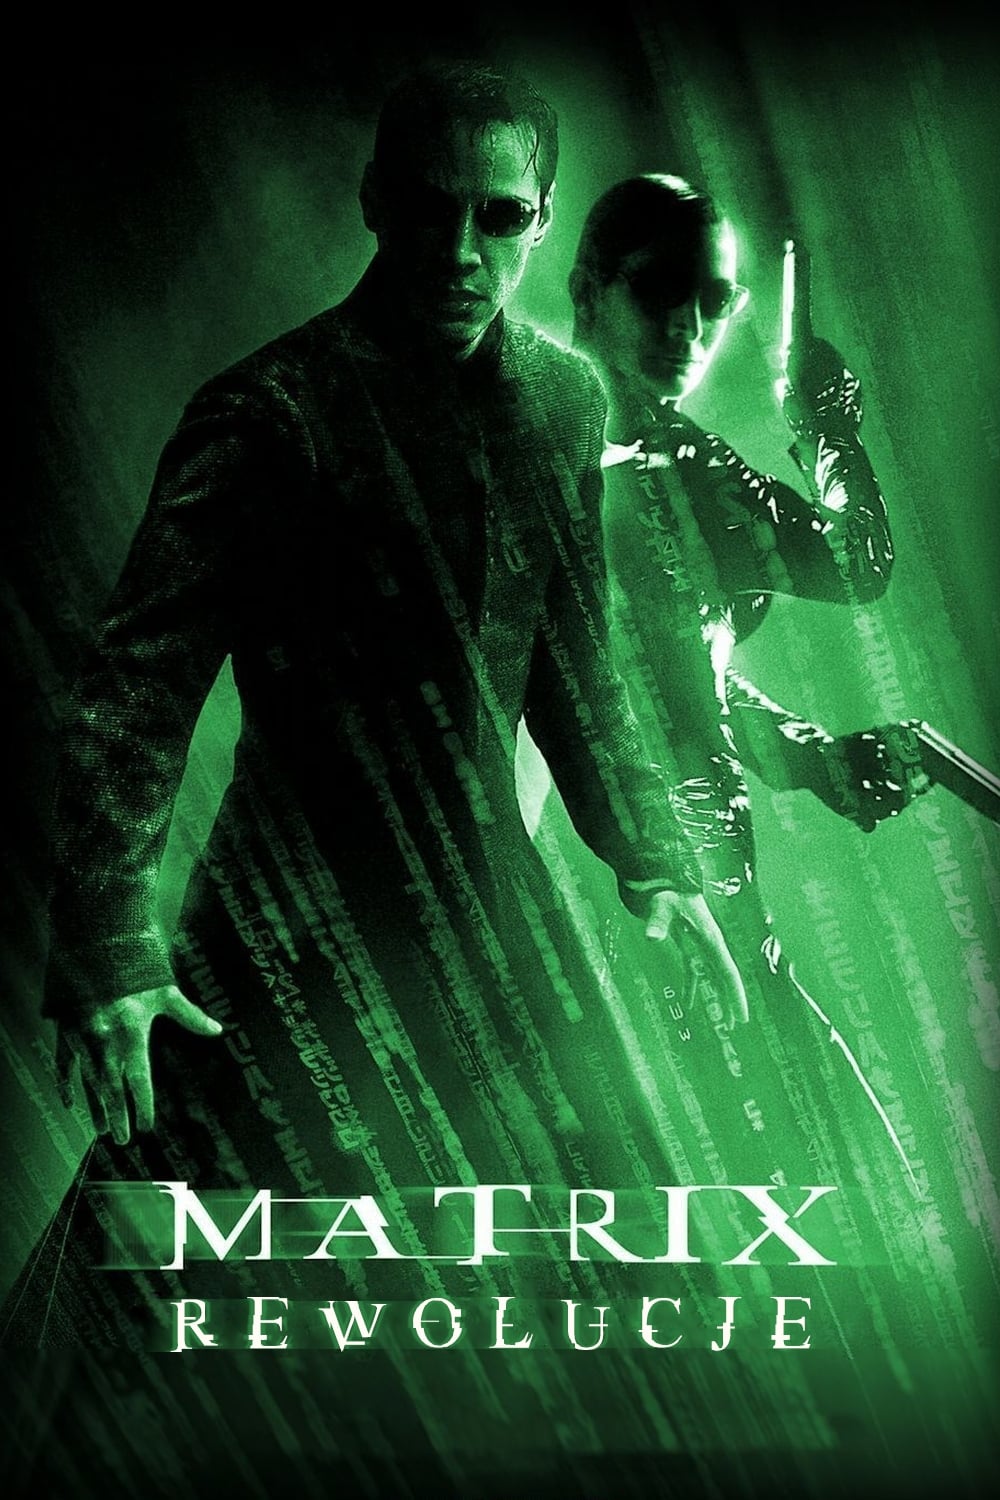 Matrix Rewolucje (2003)